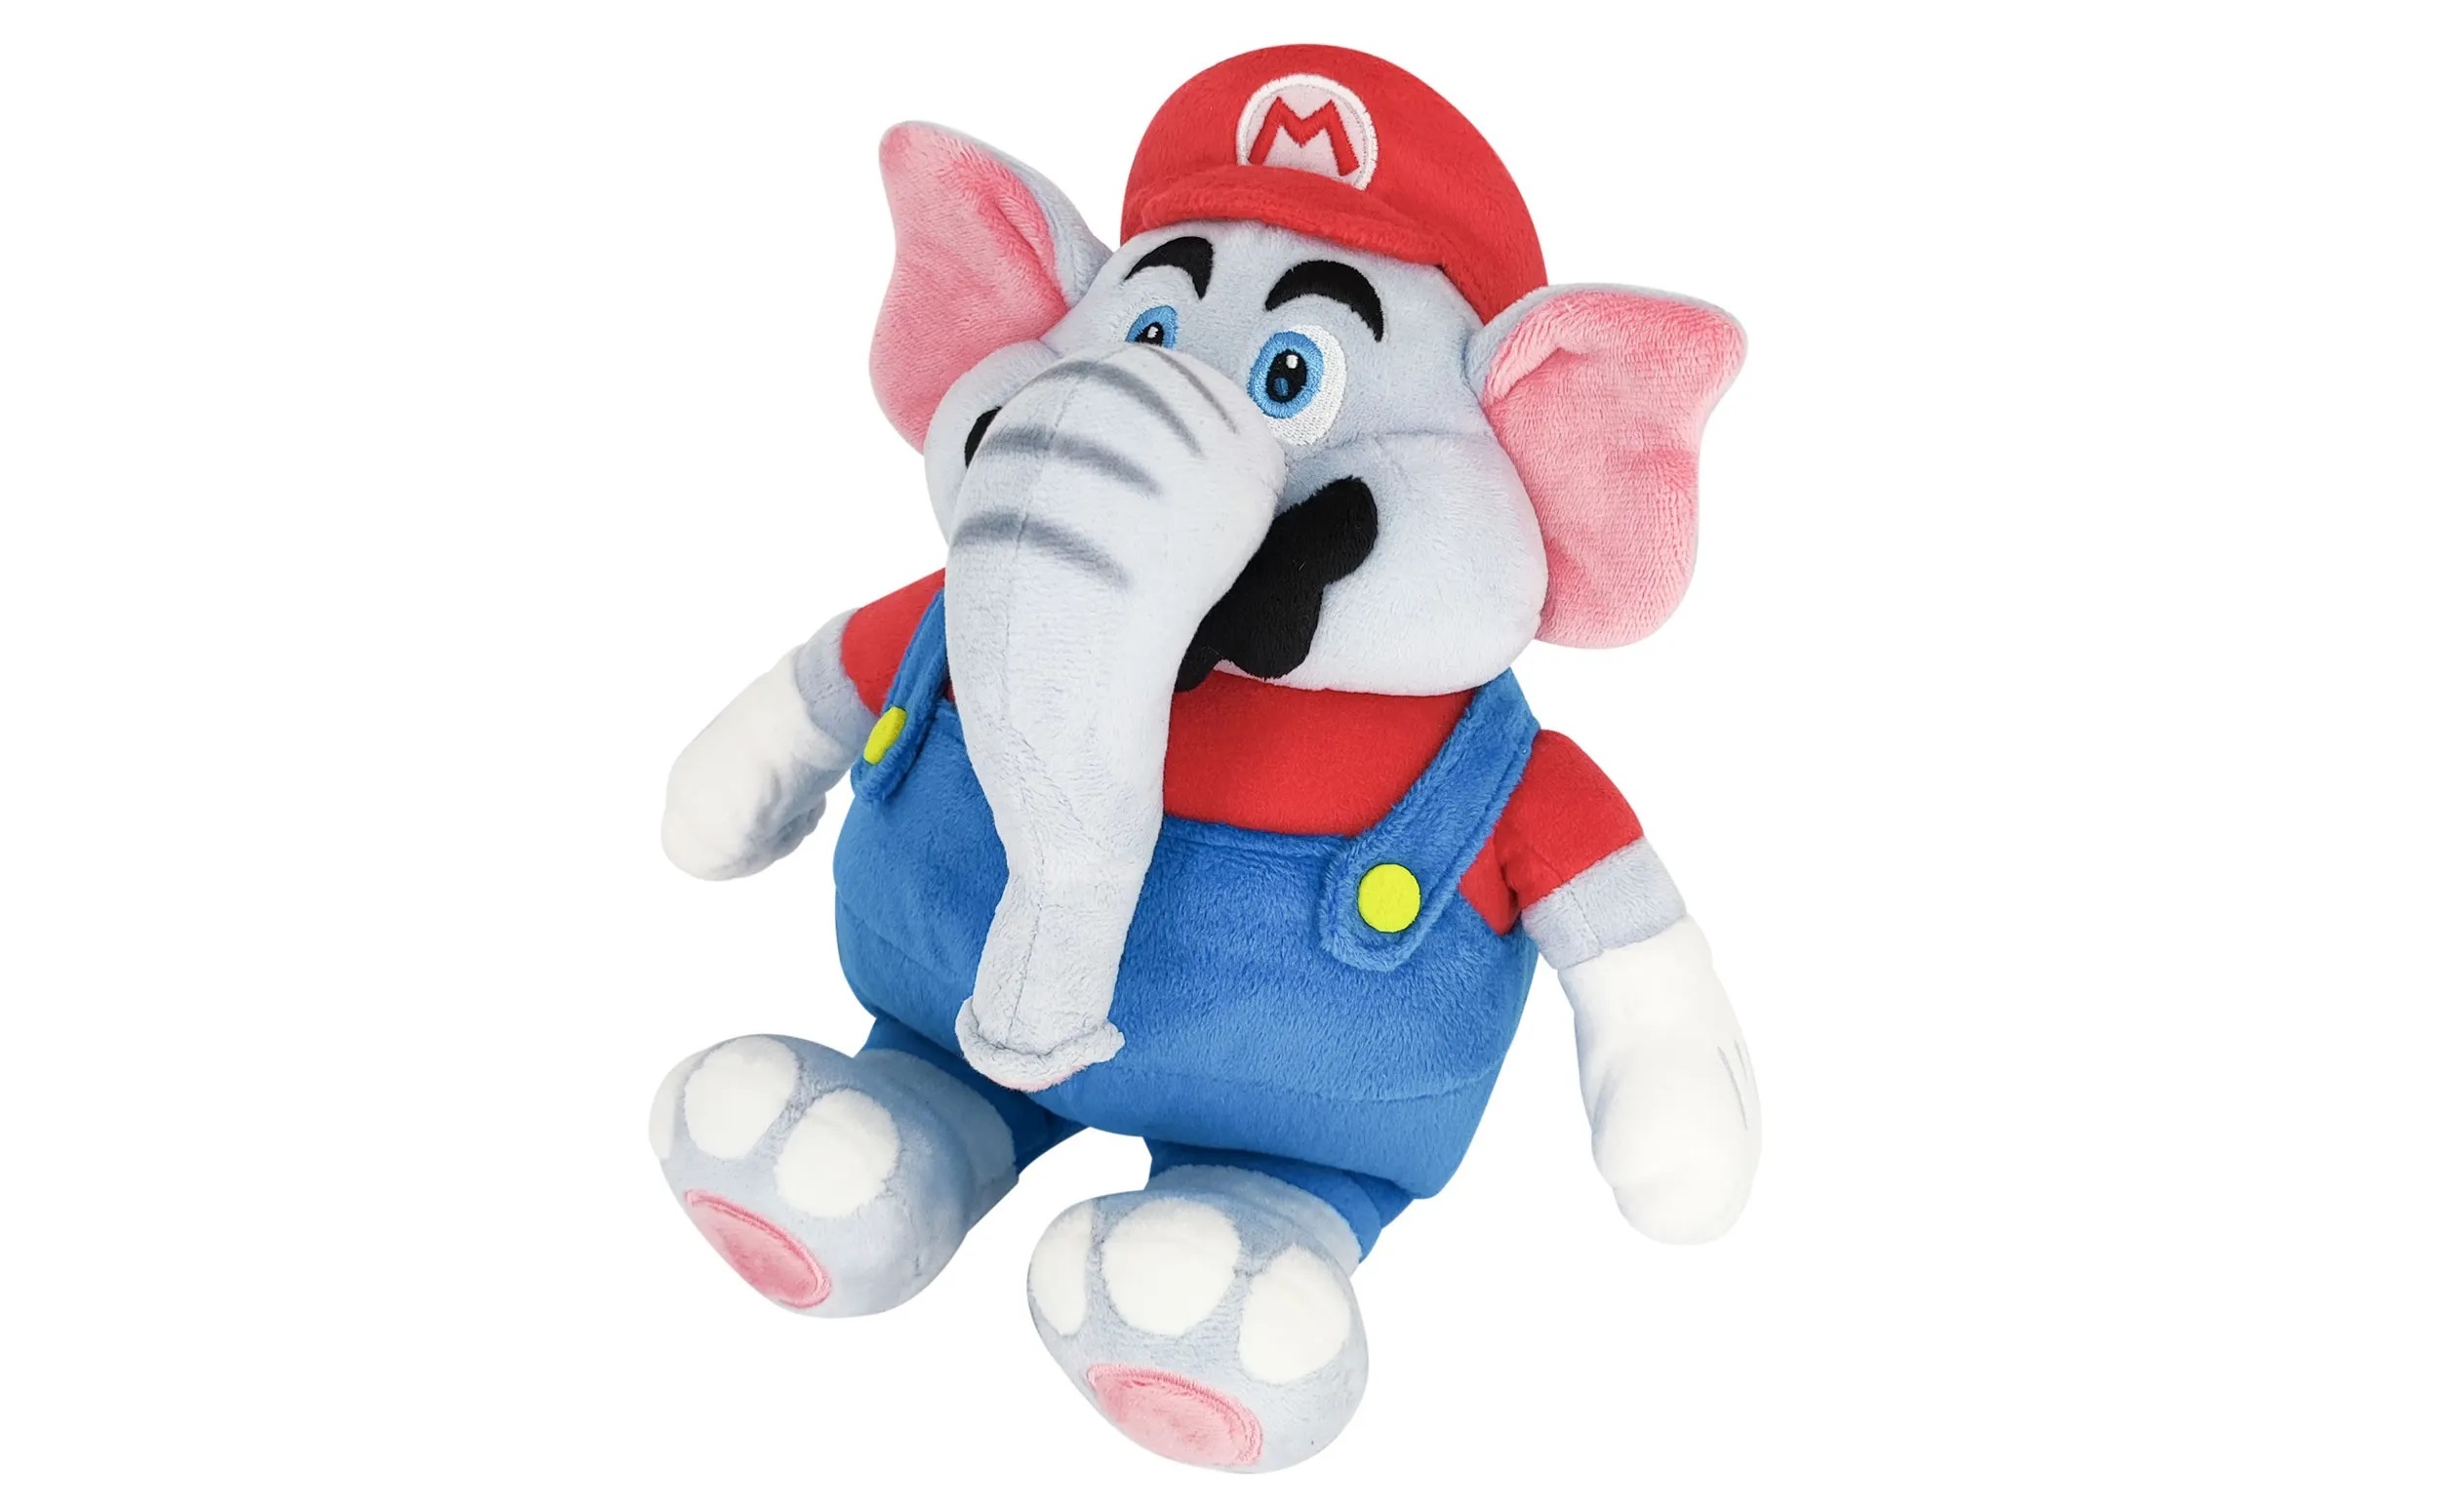 https://nintendoeverything.com/wp-content/uploads/Super-Mario-Bros.-Wonder-Elephant-Mario-plush-1.jpg